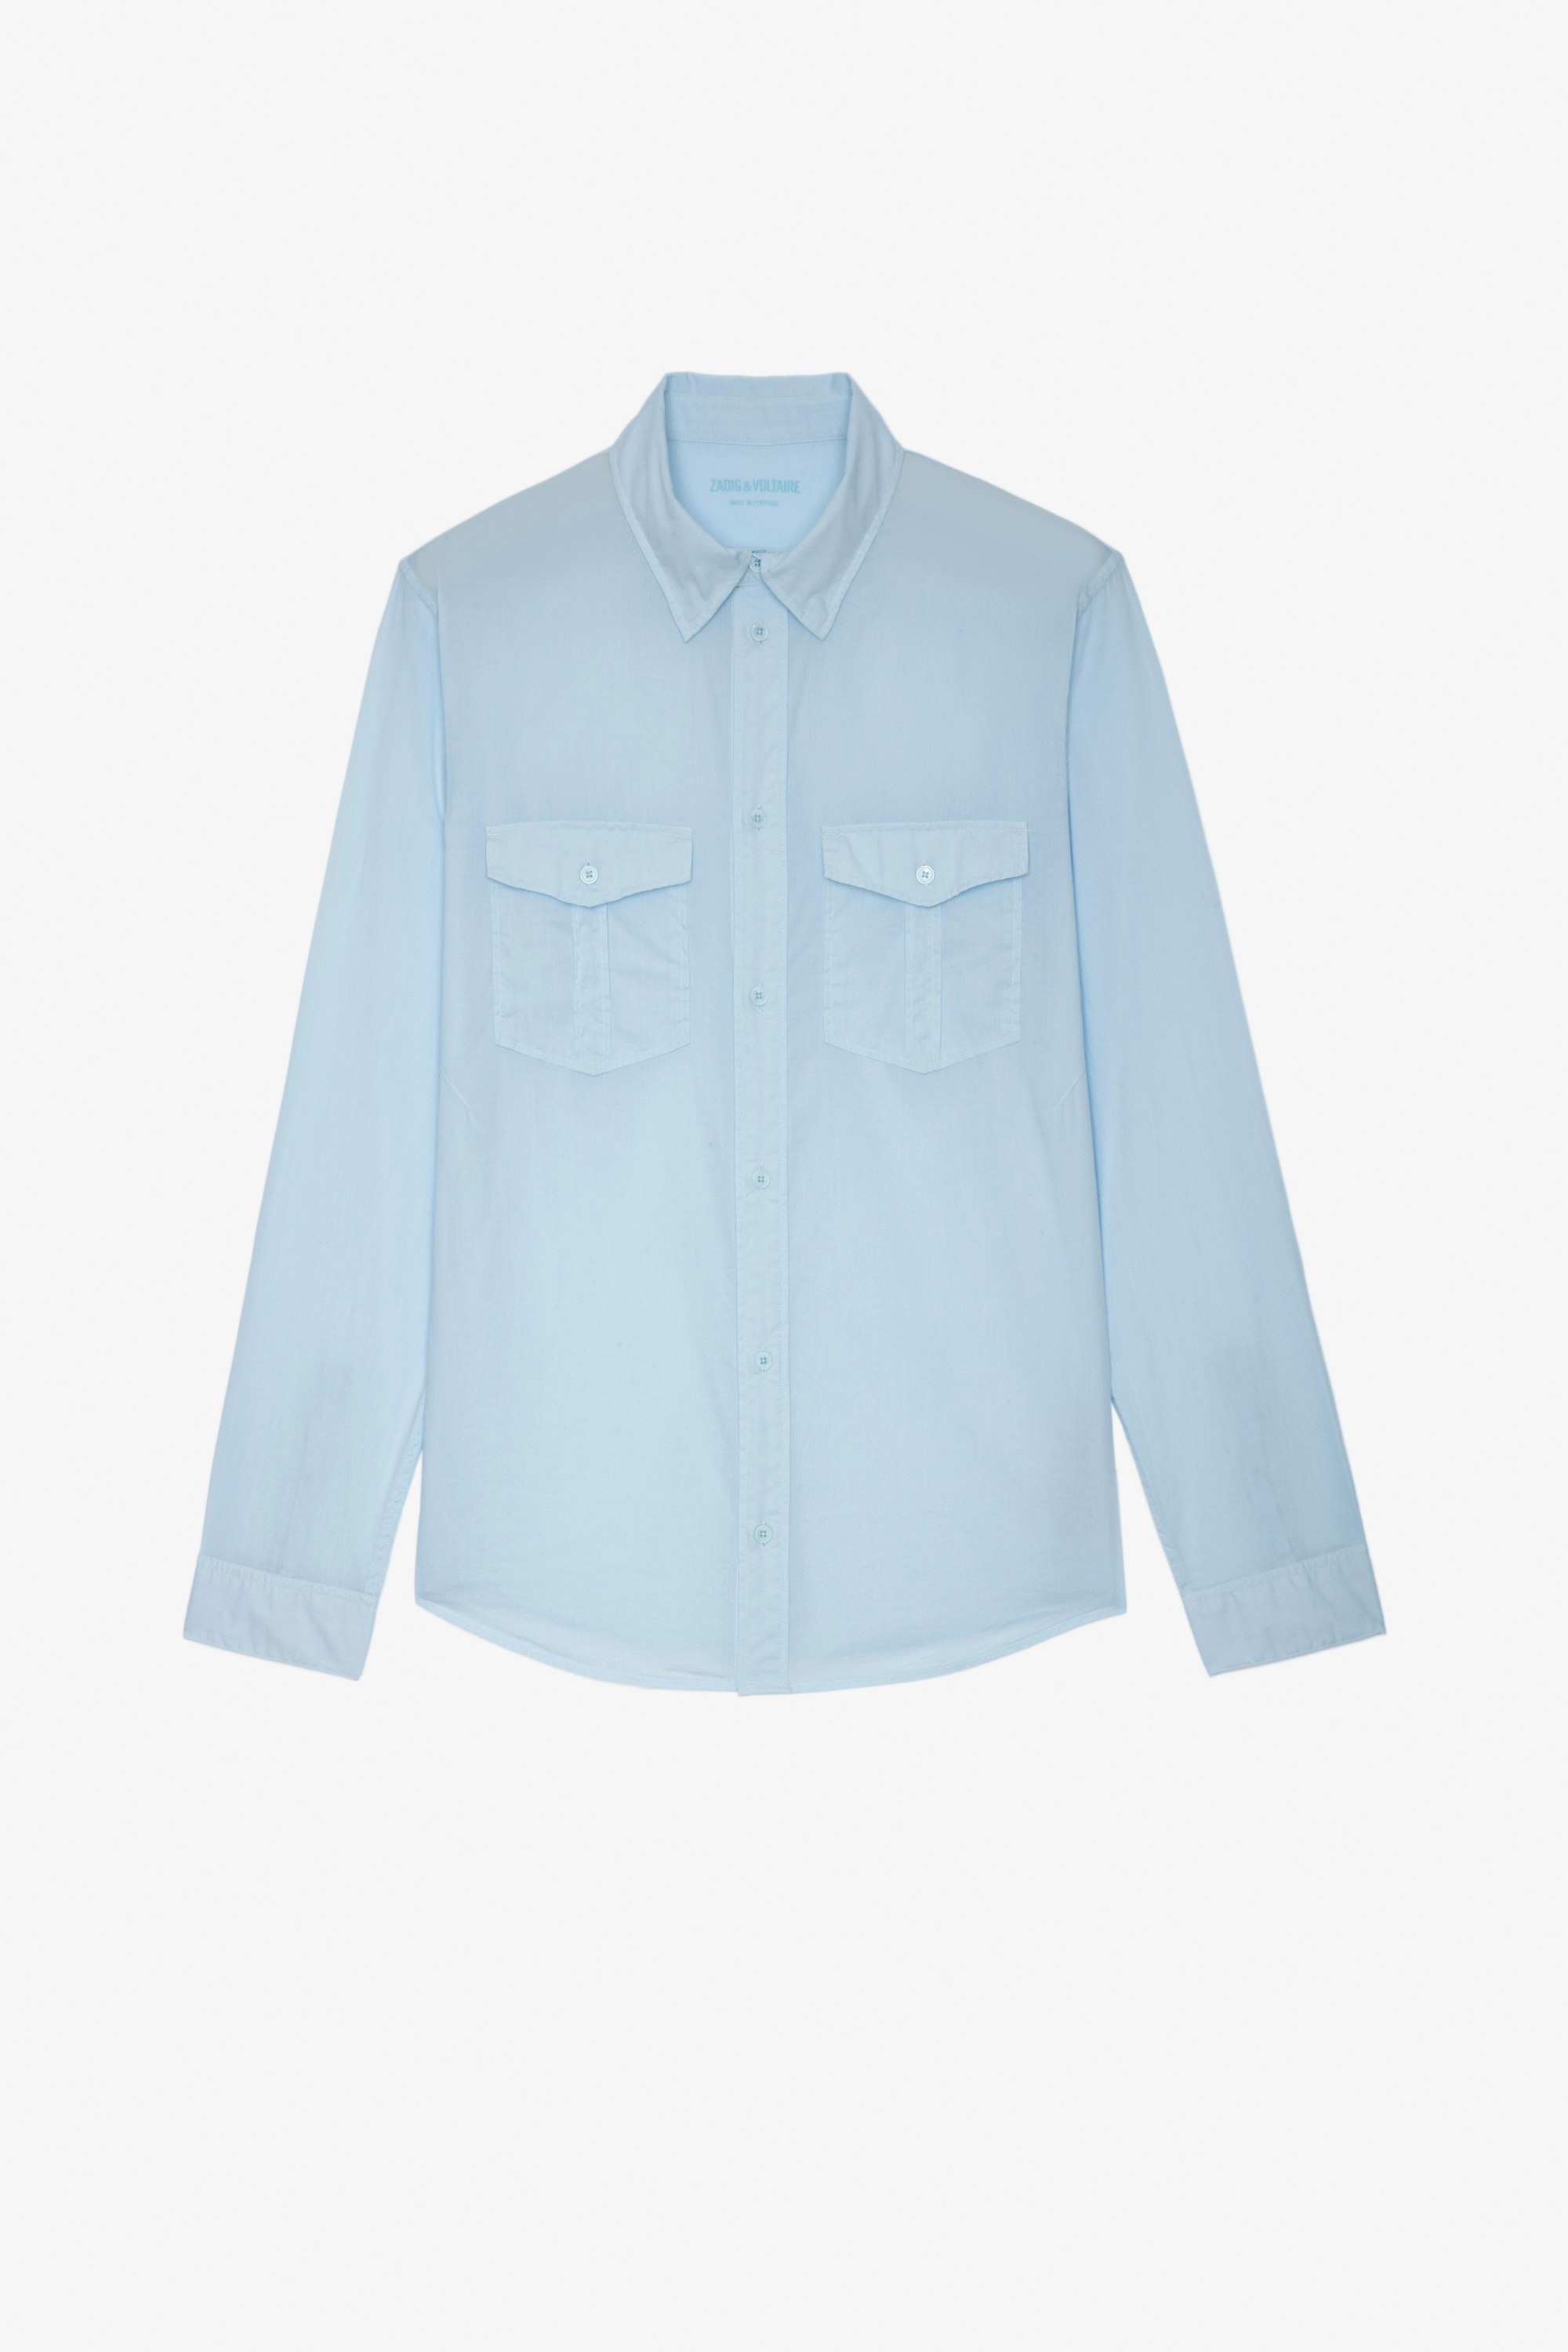 Thibaut Shirt Men's classic shirt in sky-blue cotton